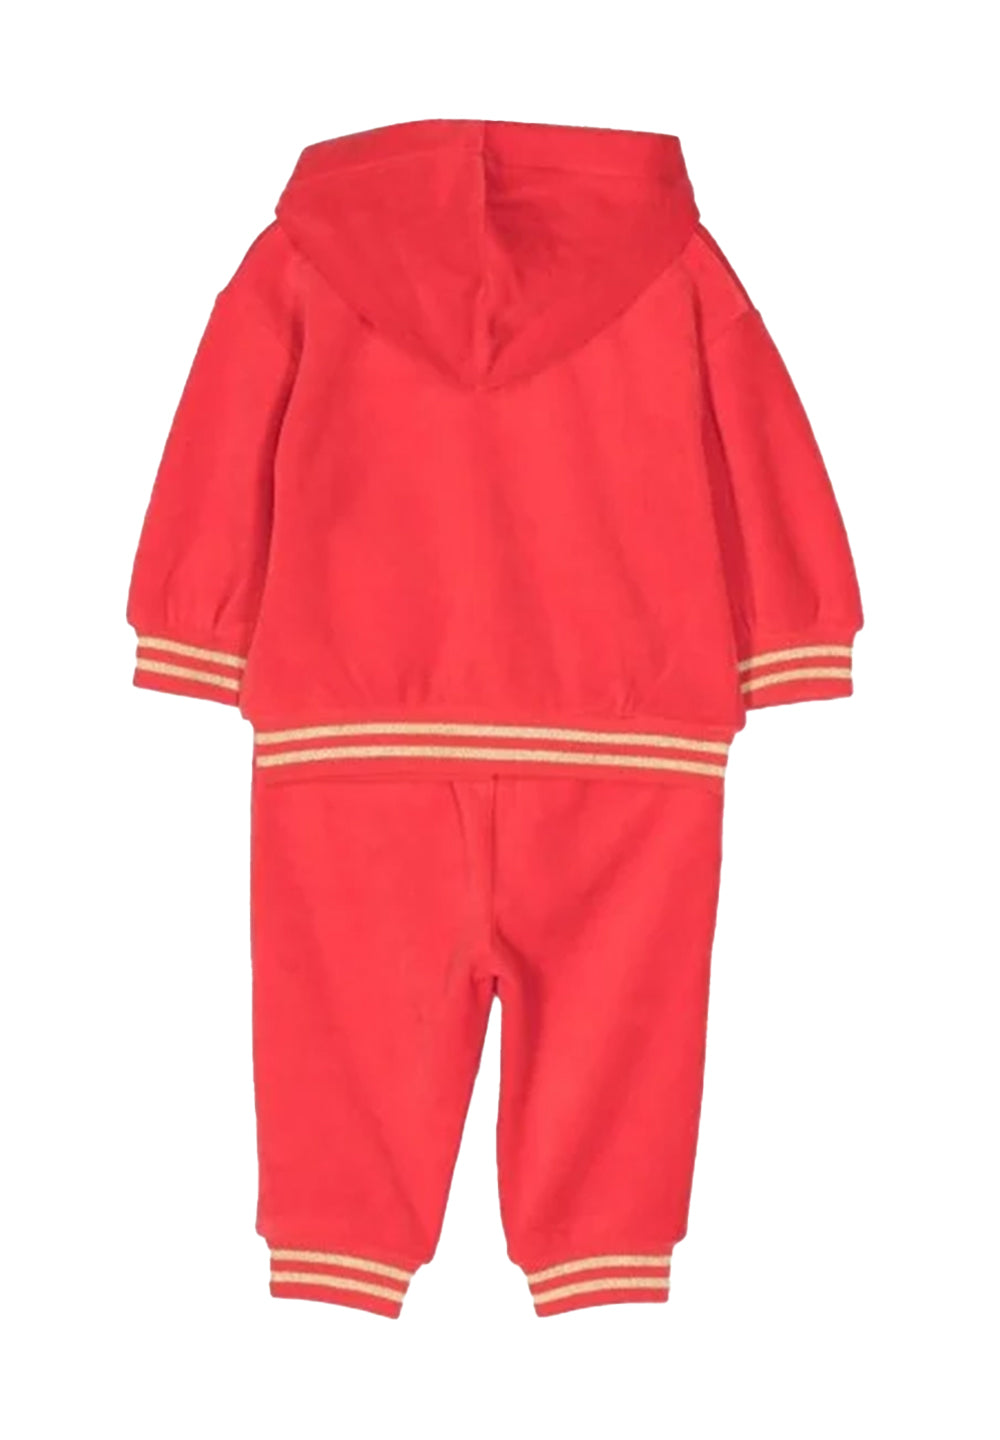 Red sweatshirt set for baby girls